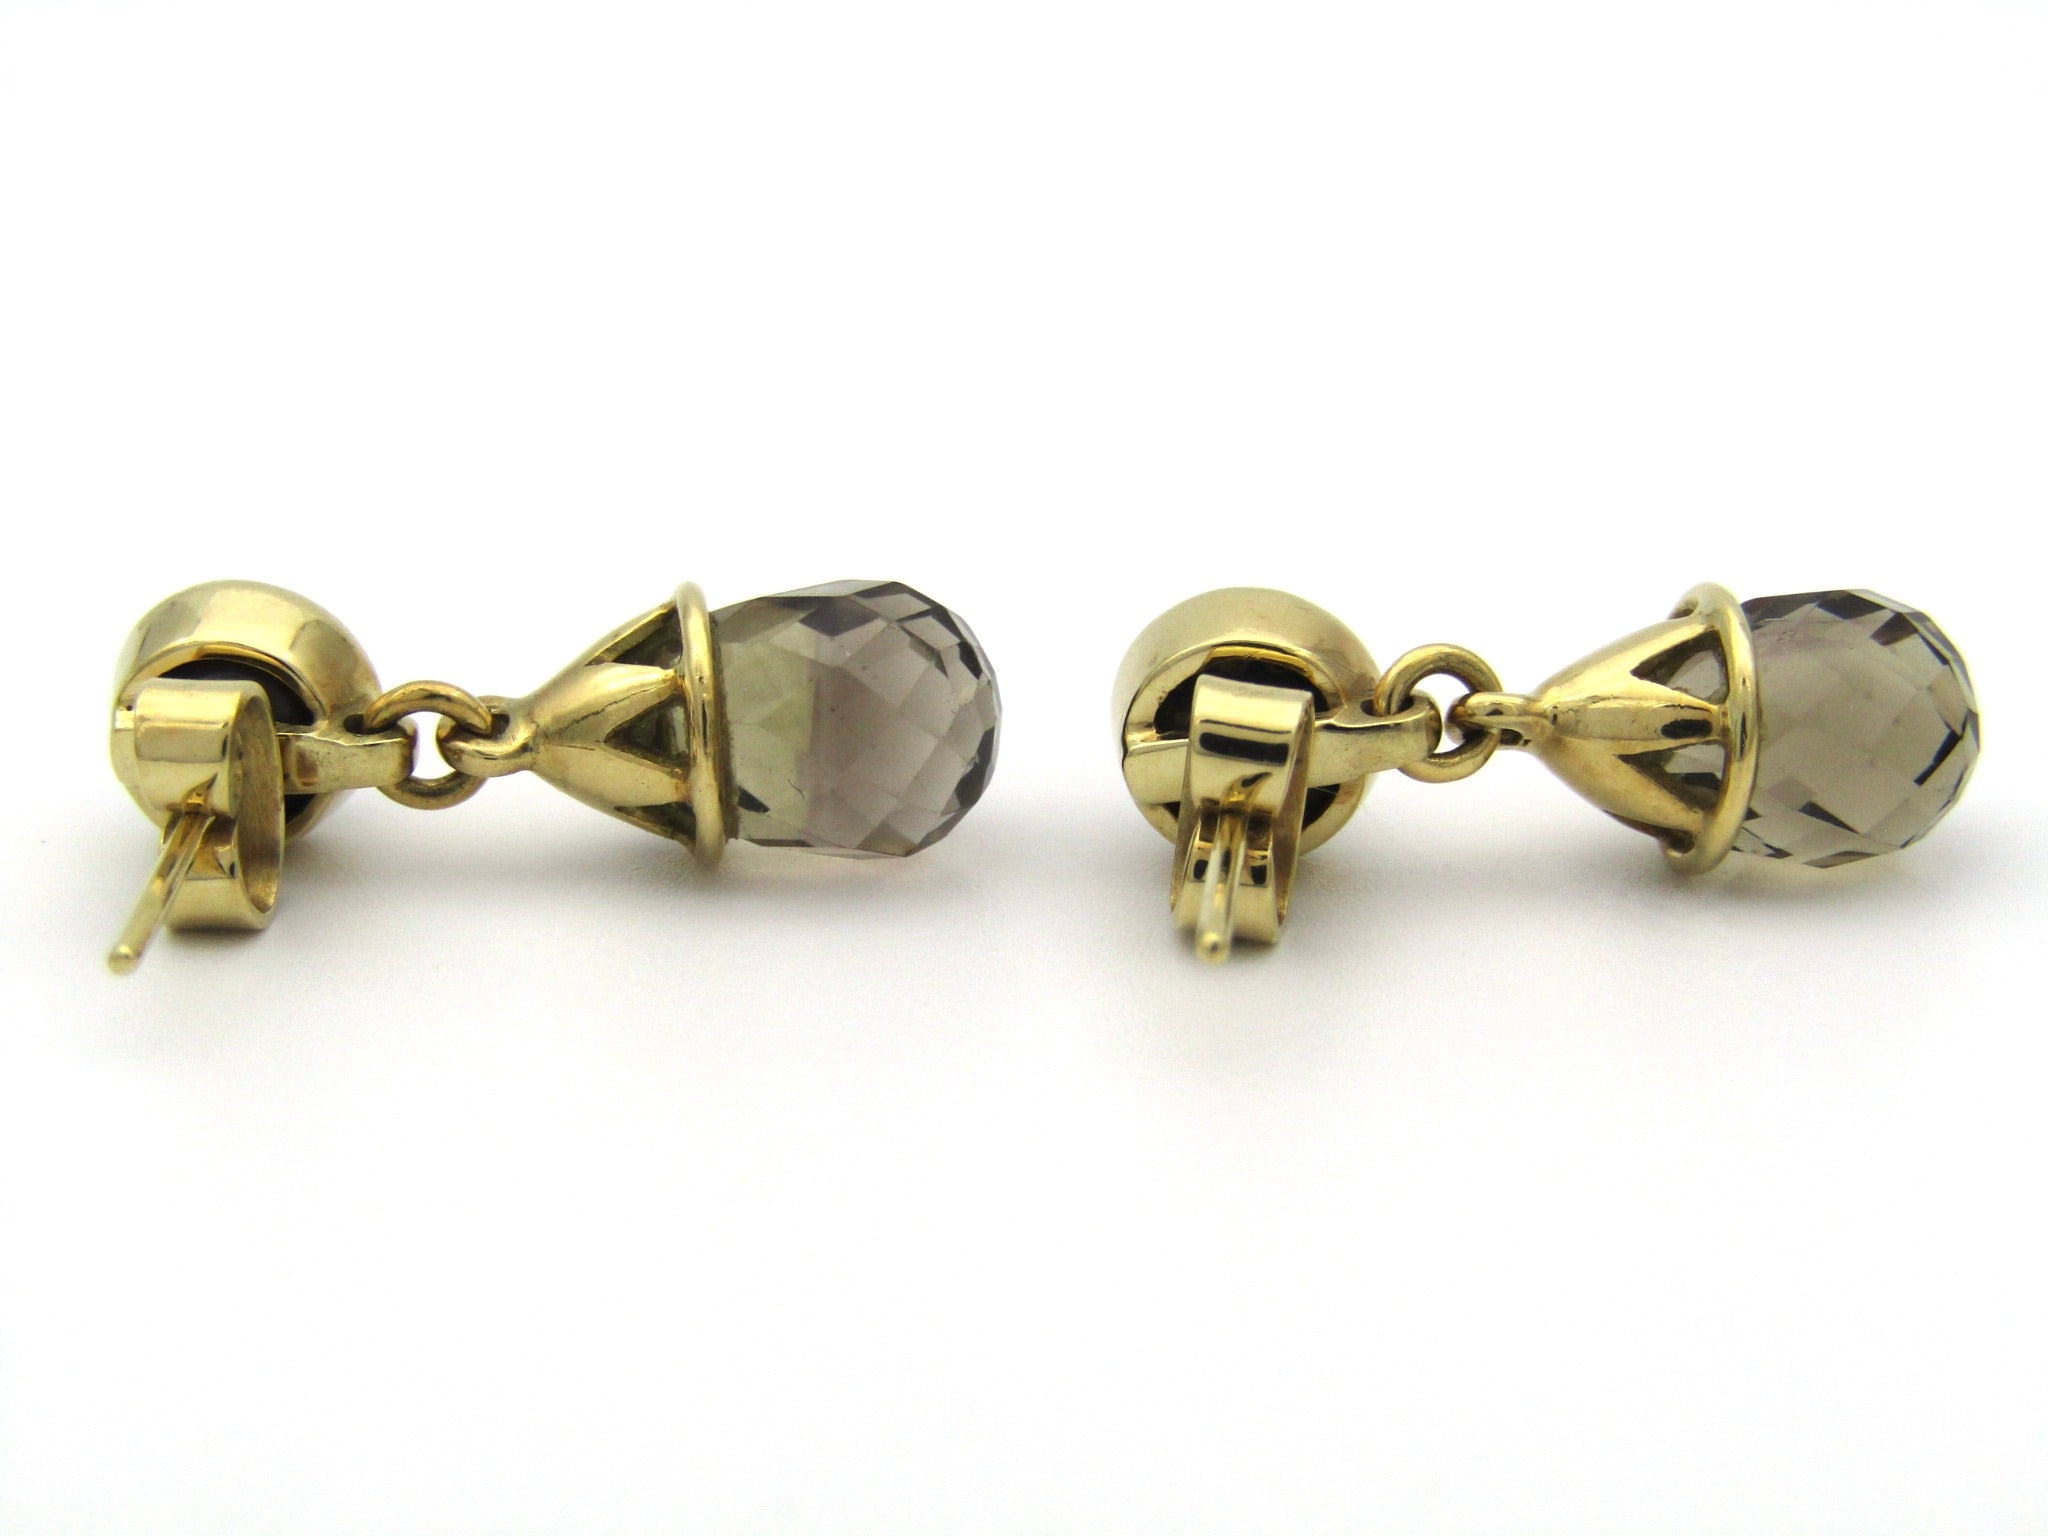 18K gold smoky quartz and pearl dangle earrings.